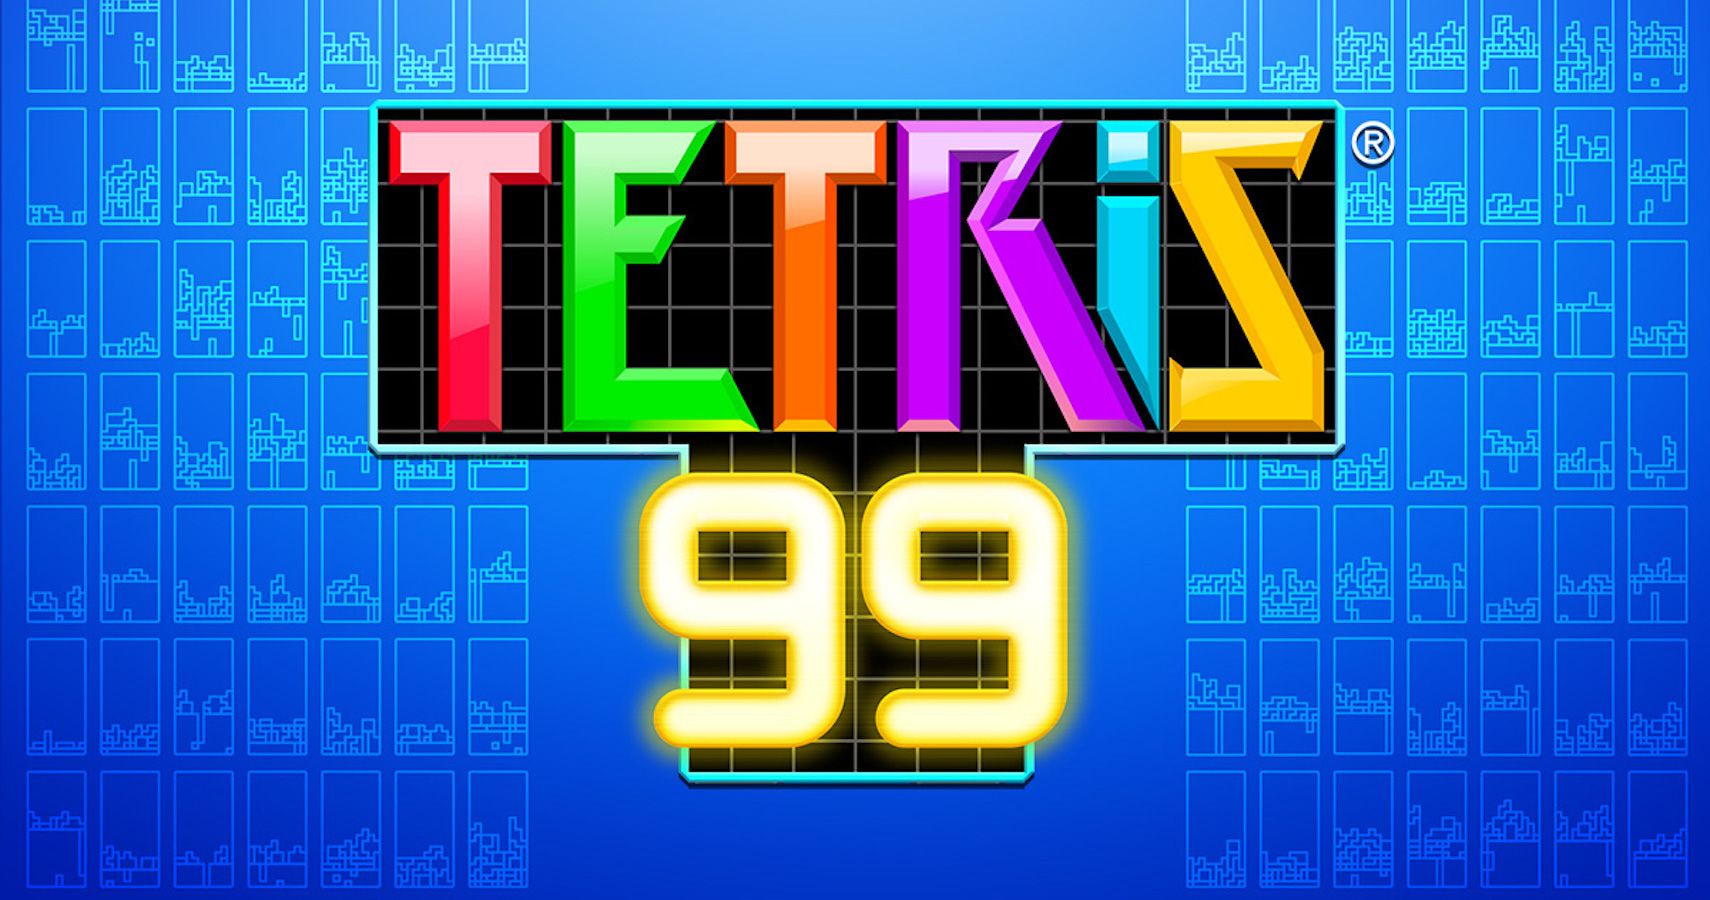 Tetris 99 Gets An Offline Mode As Paid DLC; New Tournament Offers Classic GB Skin As Prize